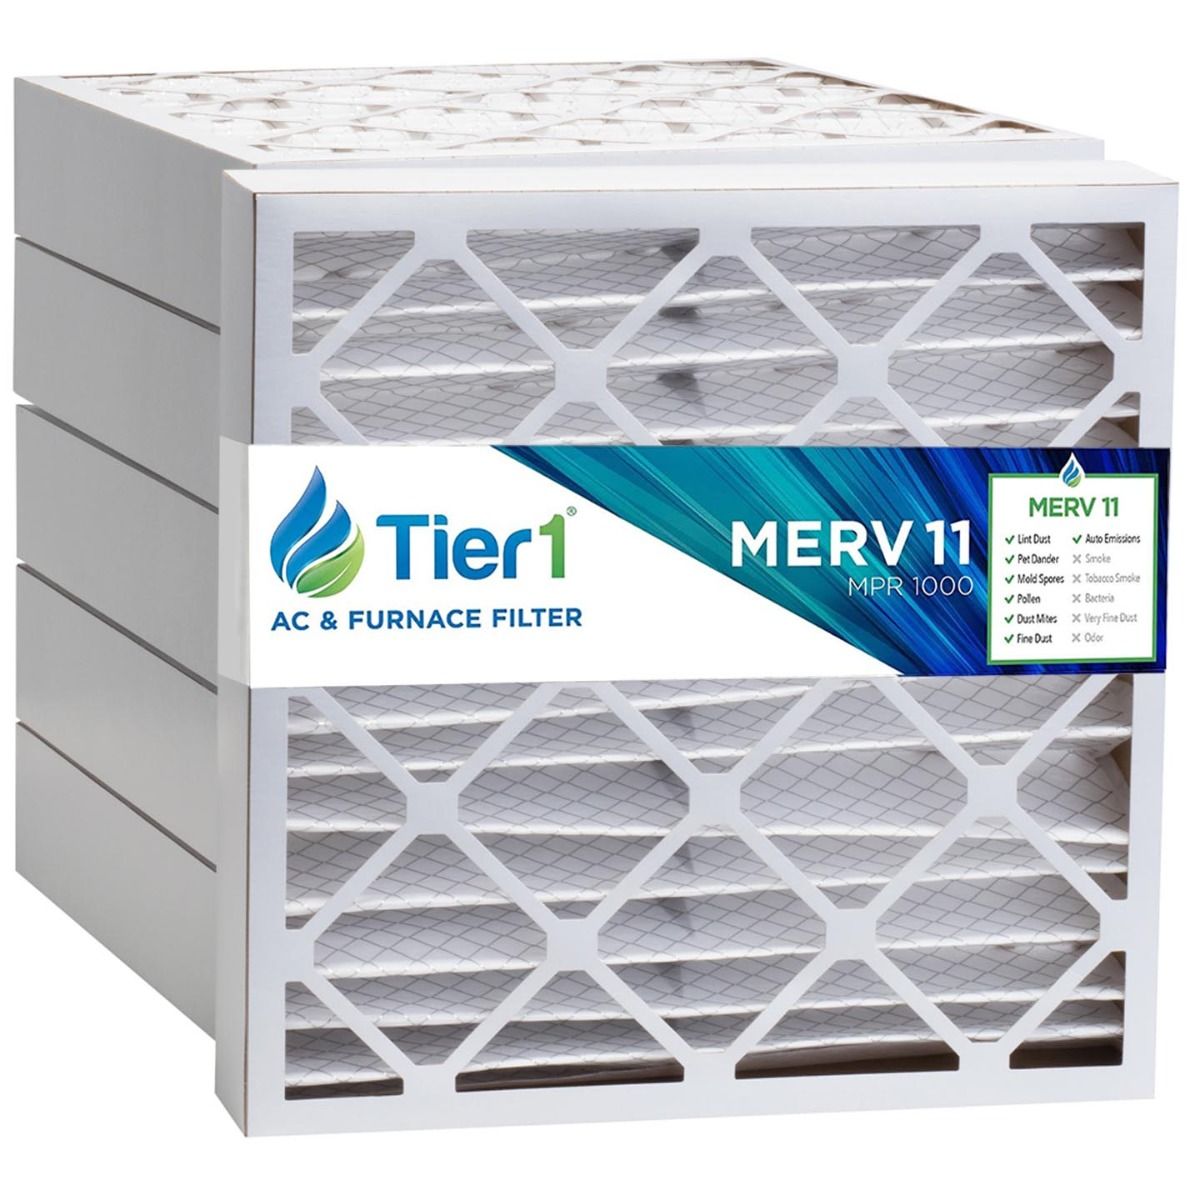 20x20x4 Merv 11 Universal Air Filter By Tier1 (Single Filter)